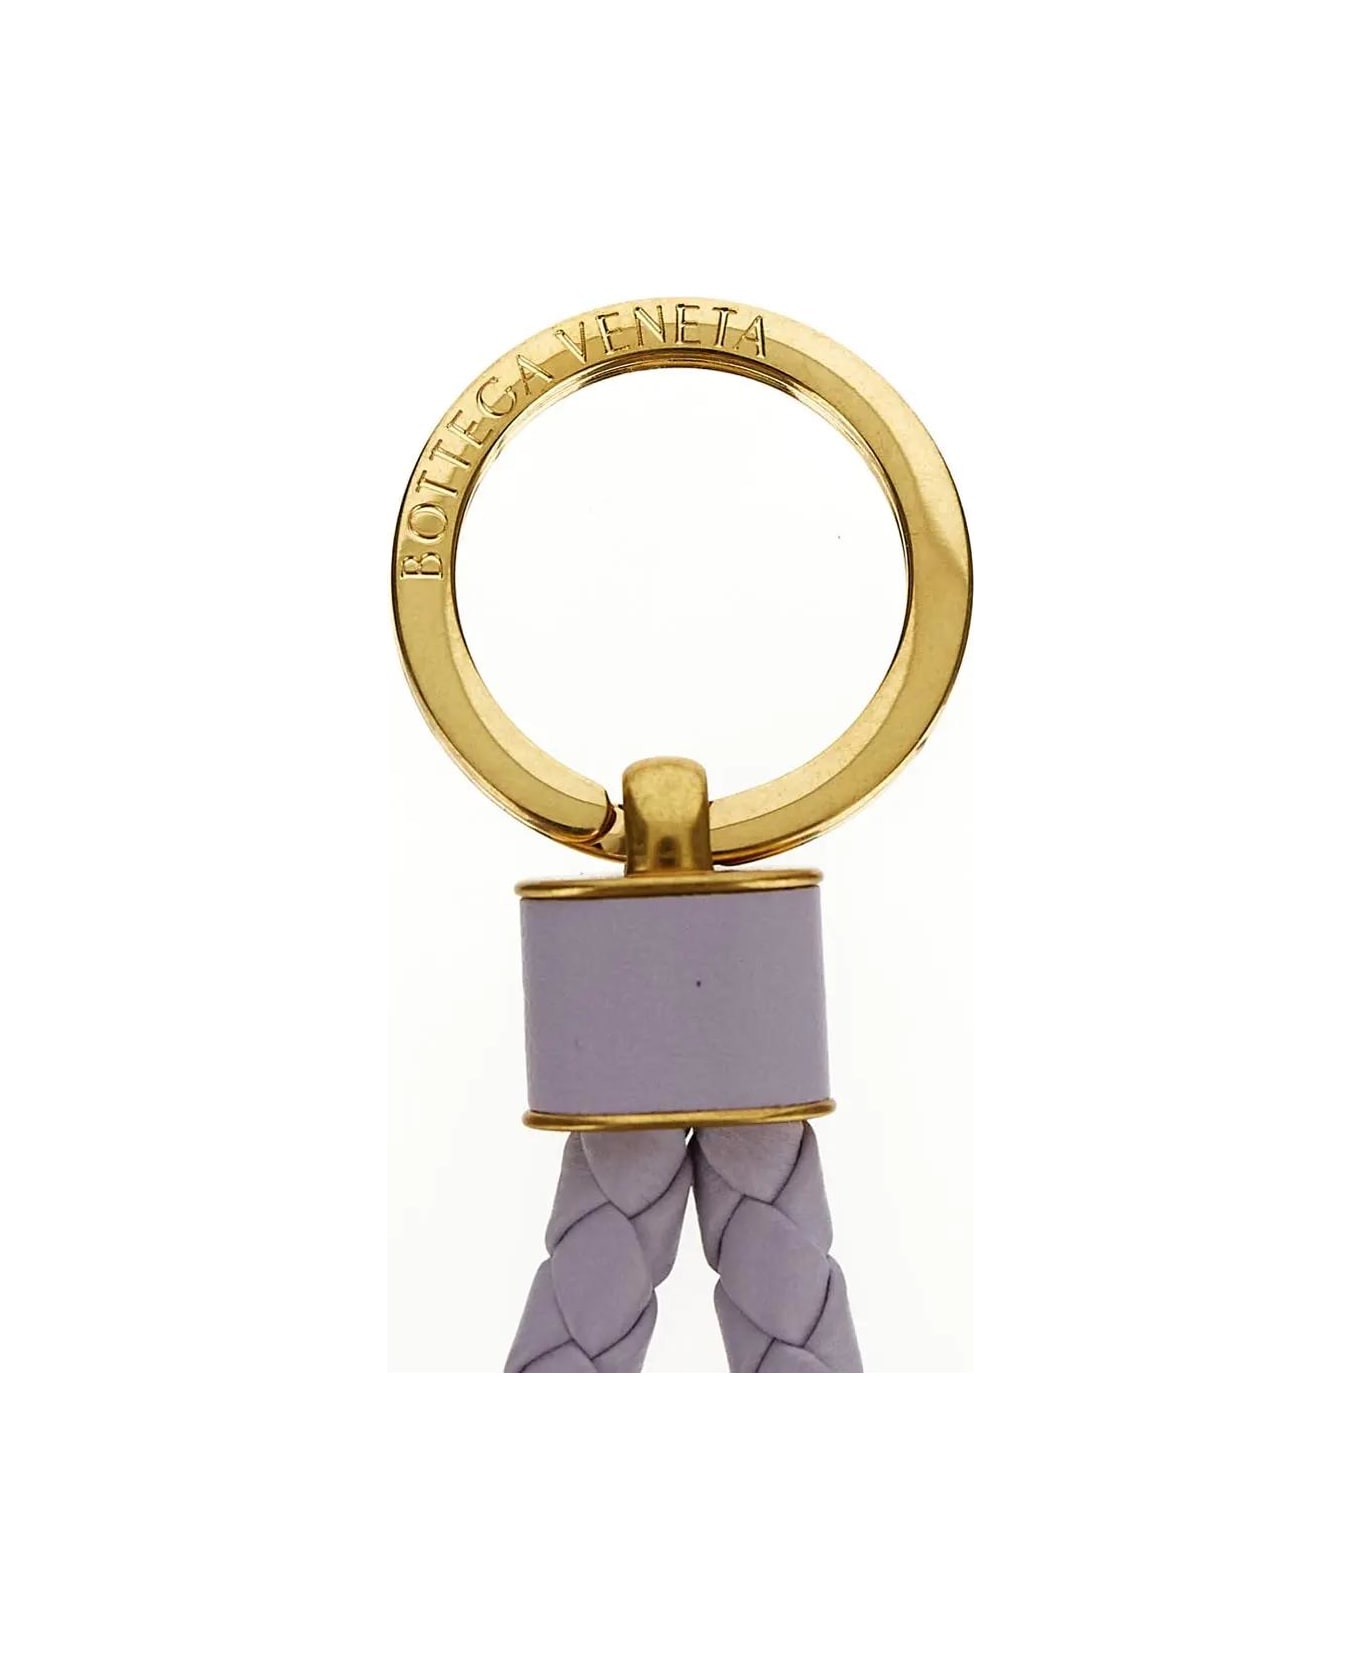 Bottega Veneta Key Ring - OYSTER-GOLD